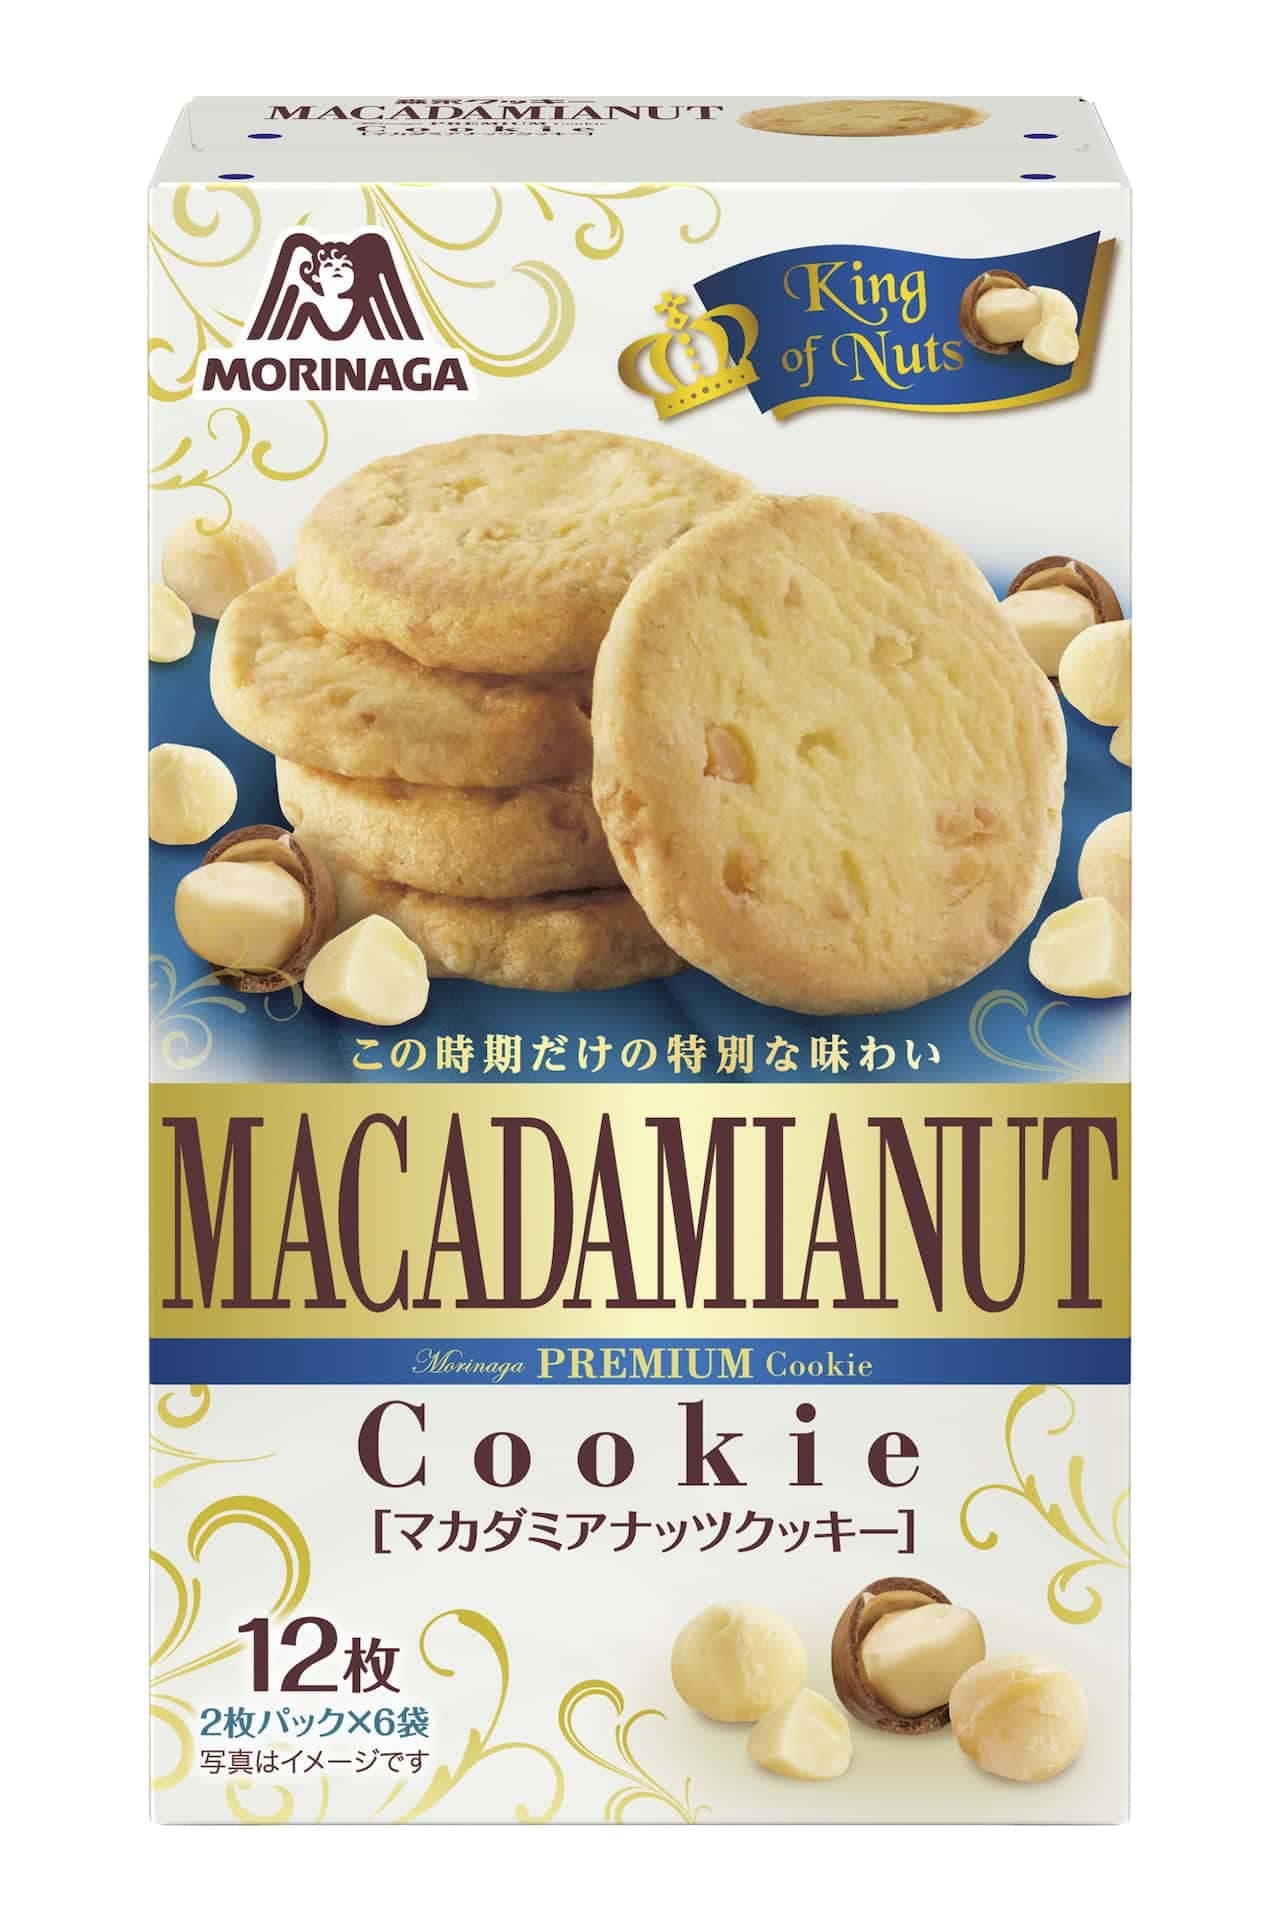 Macadamia Nut Cookies" from Morinaga Seika